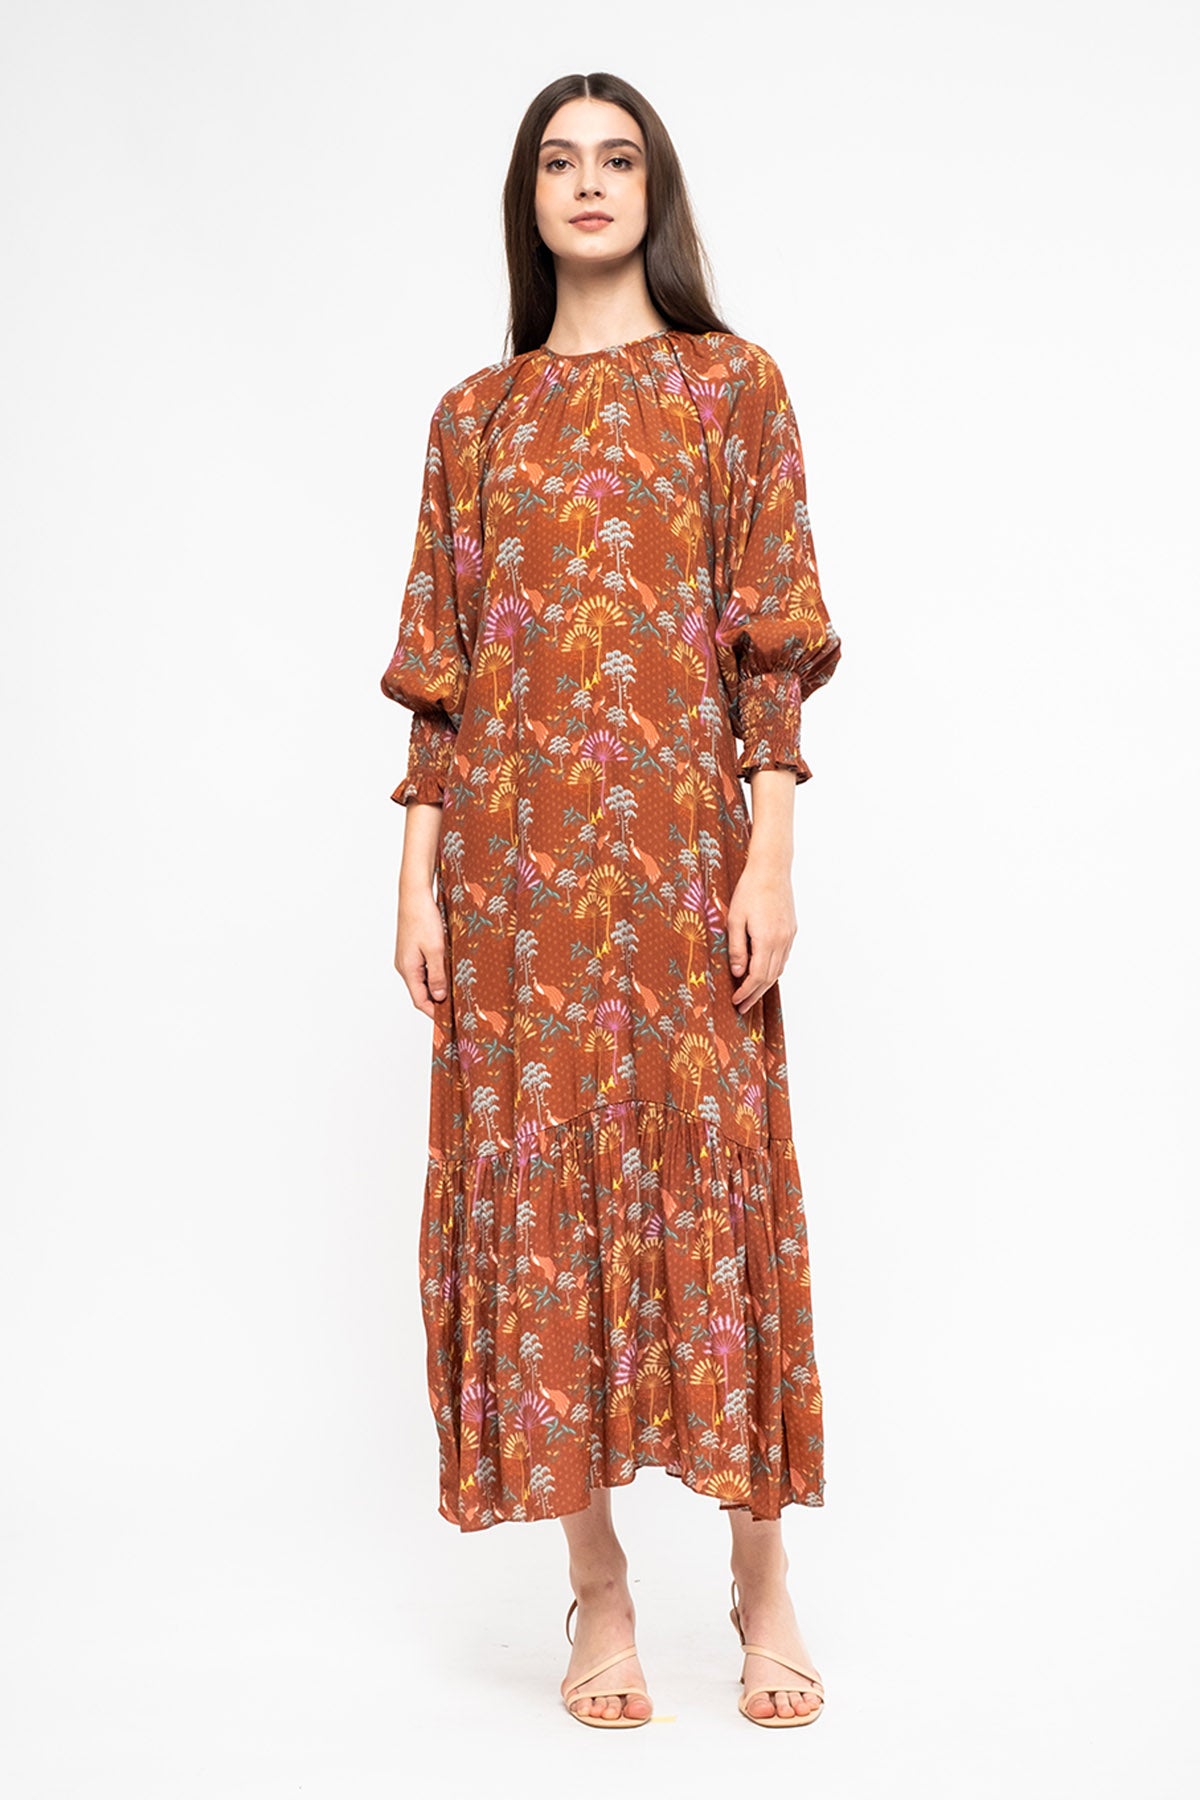 EILA Dress in Terracotta Kuau